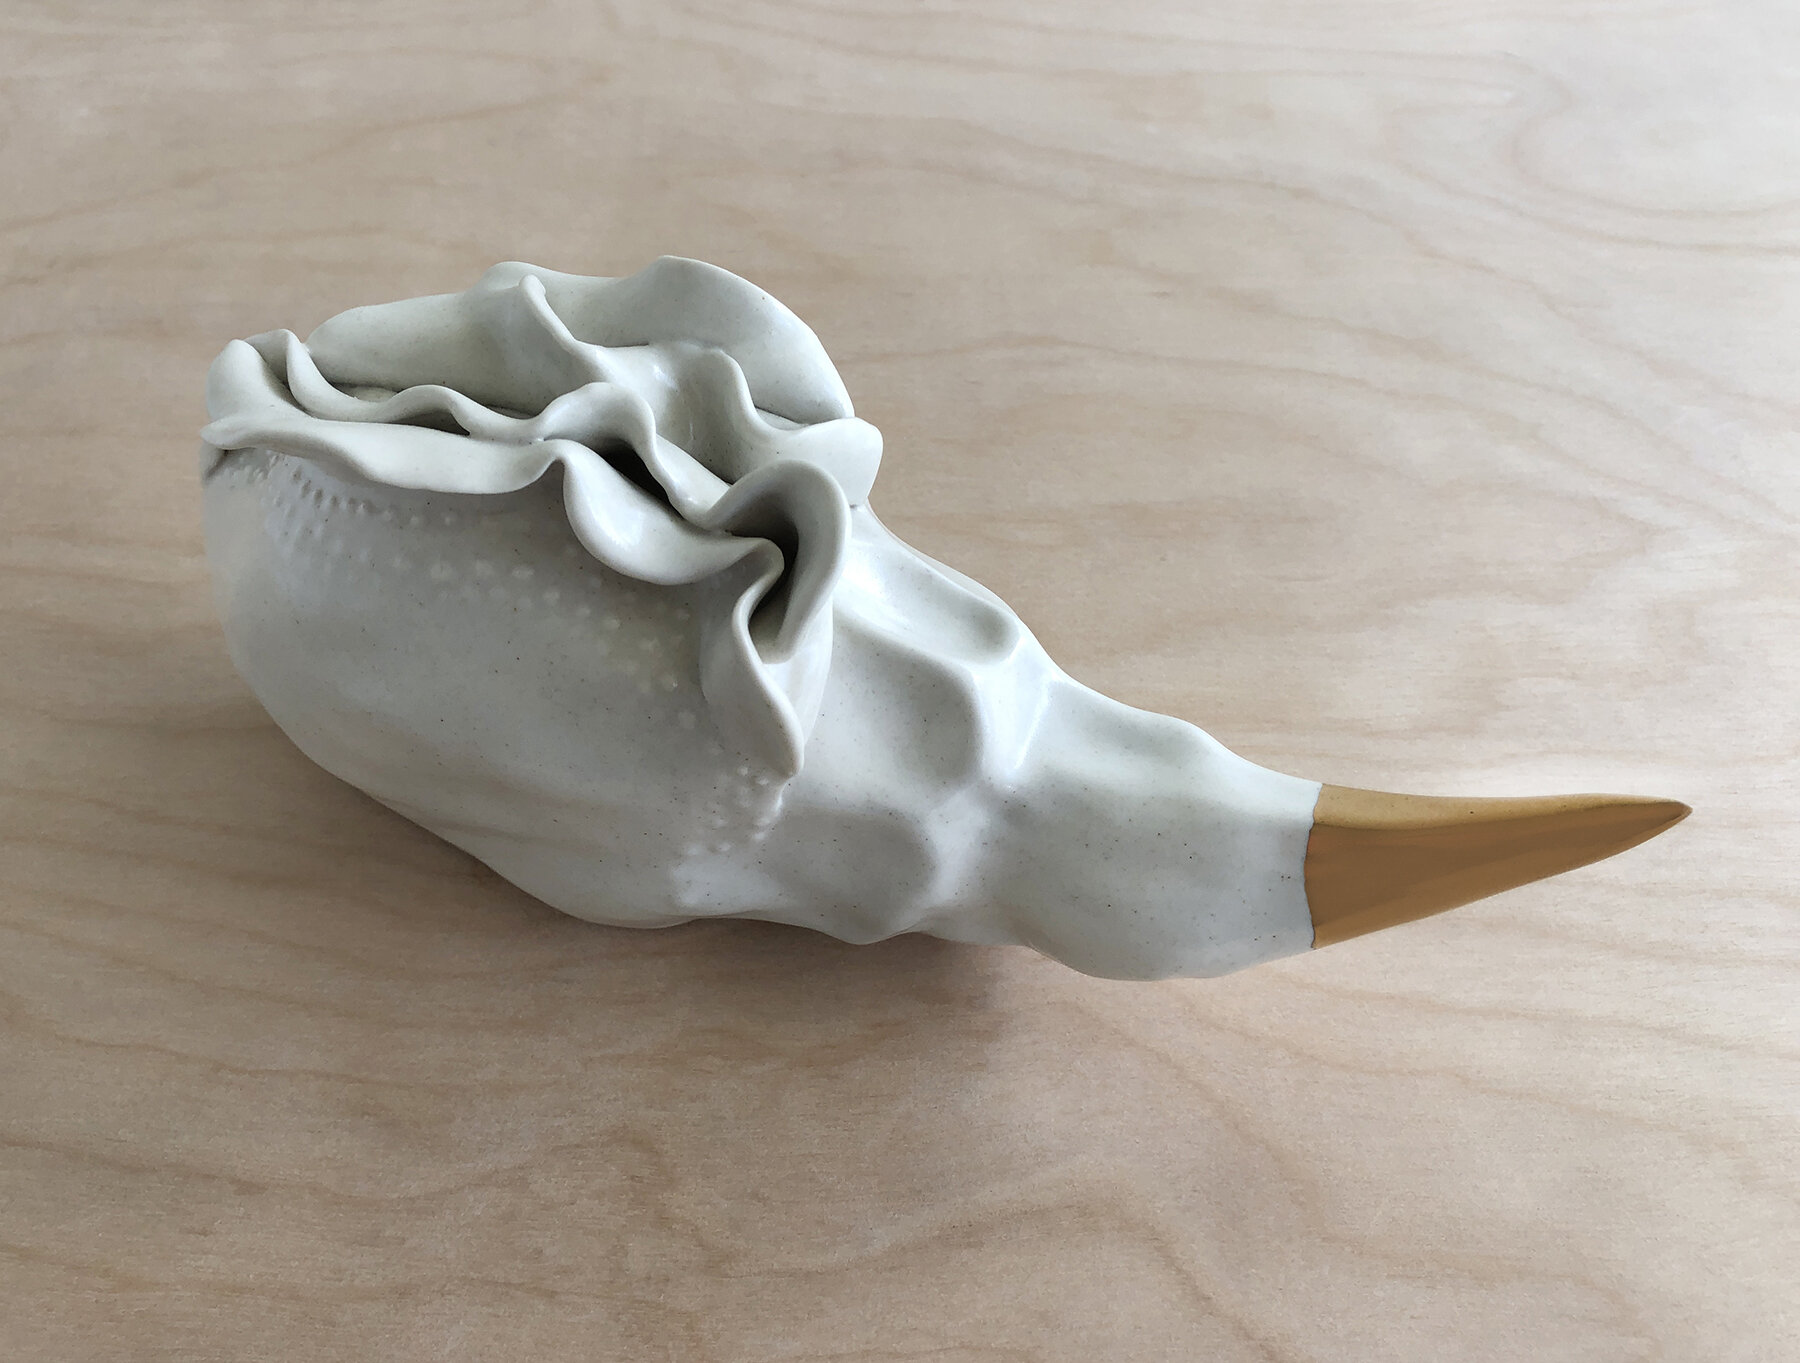 09-Ceramic-Art-BonesBlooms-2.jpg